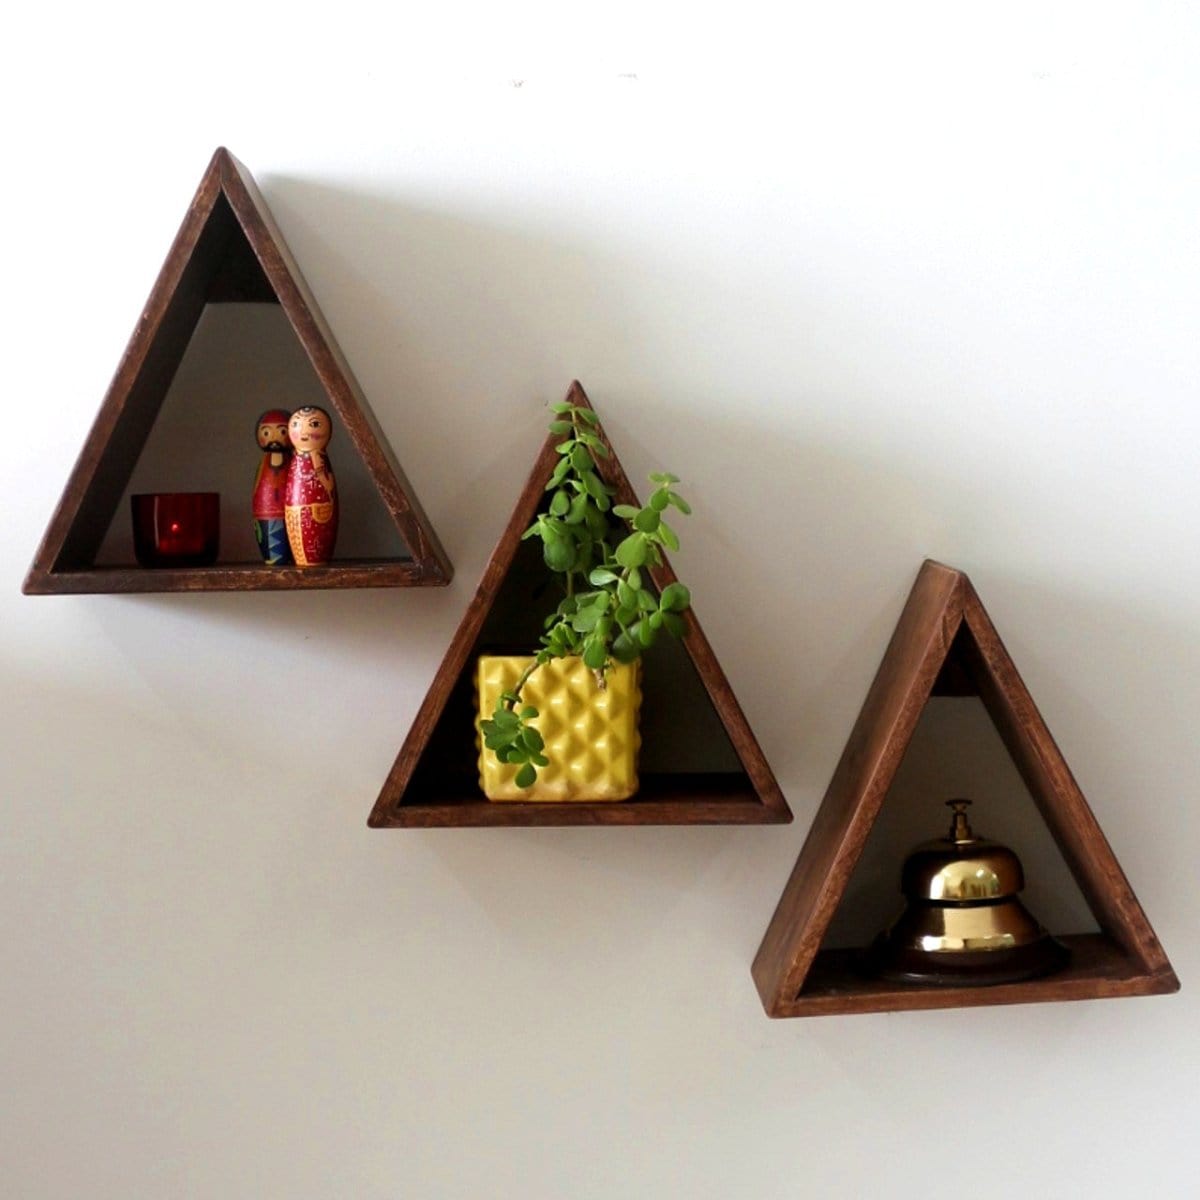 Barish Wall Shelf Triangular (Set of 3) Best Home Decor Handcrafted